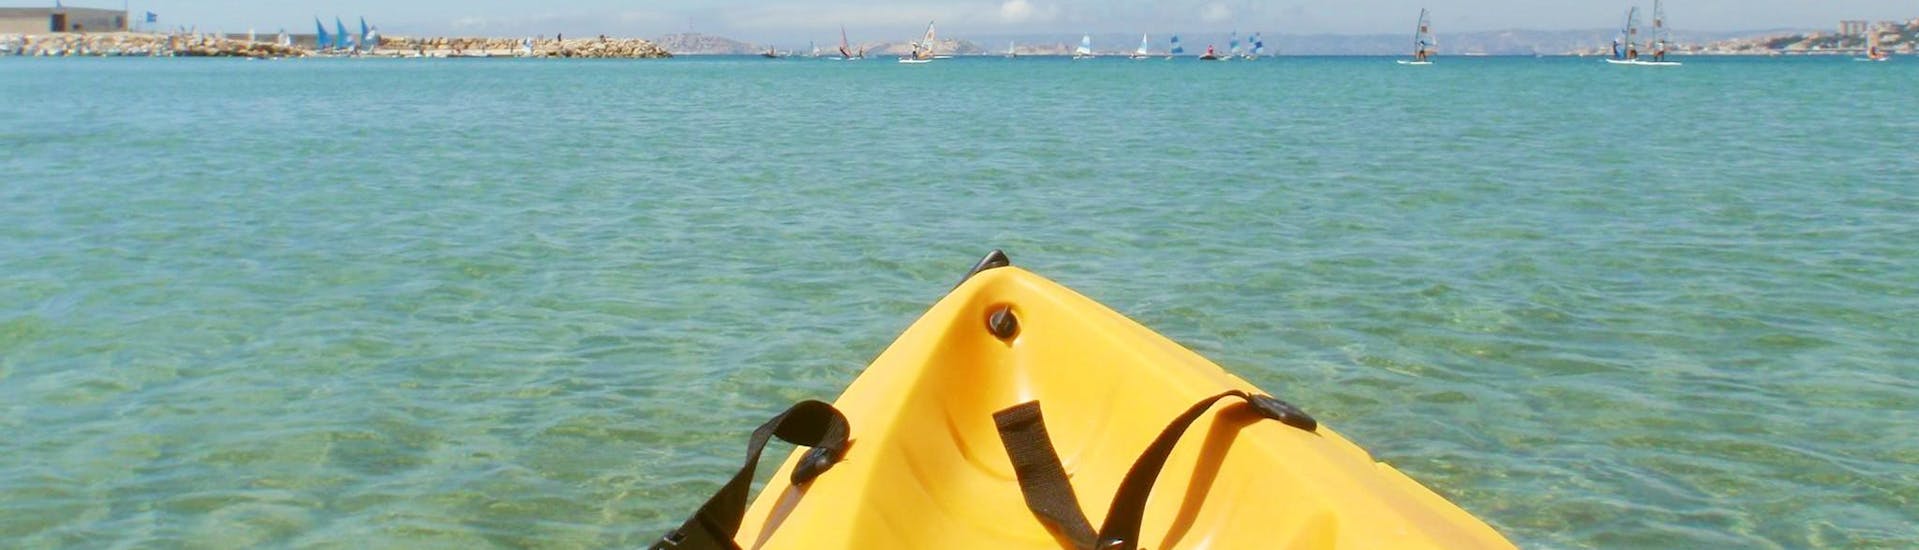 Kayak y piragua en Marsella - Côte d'Azur (Costa Azul).